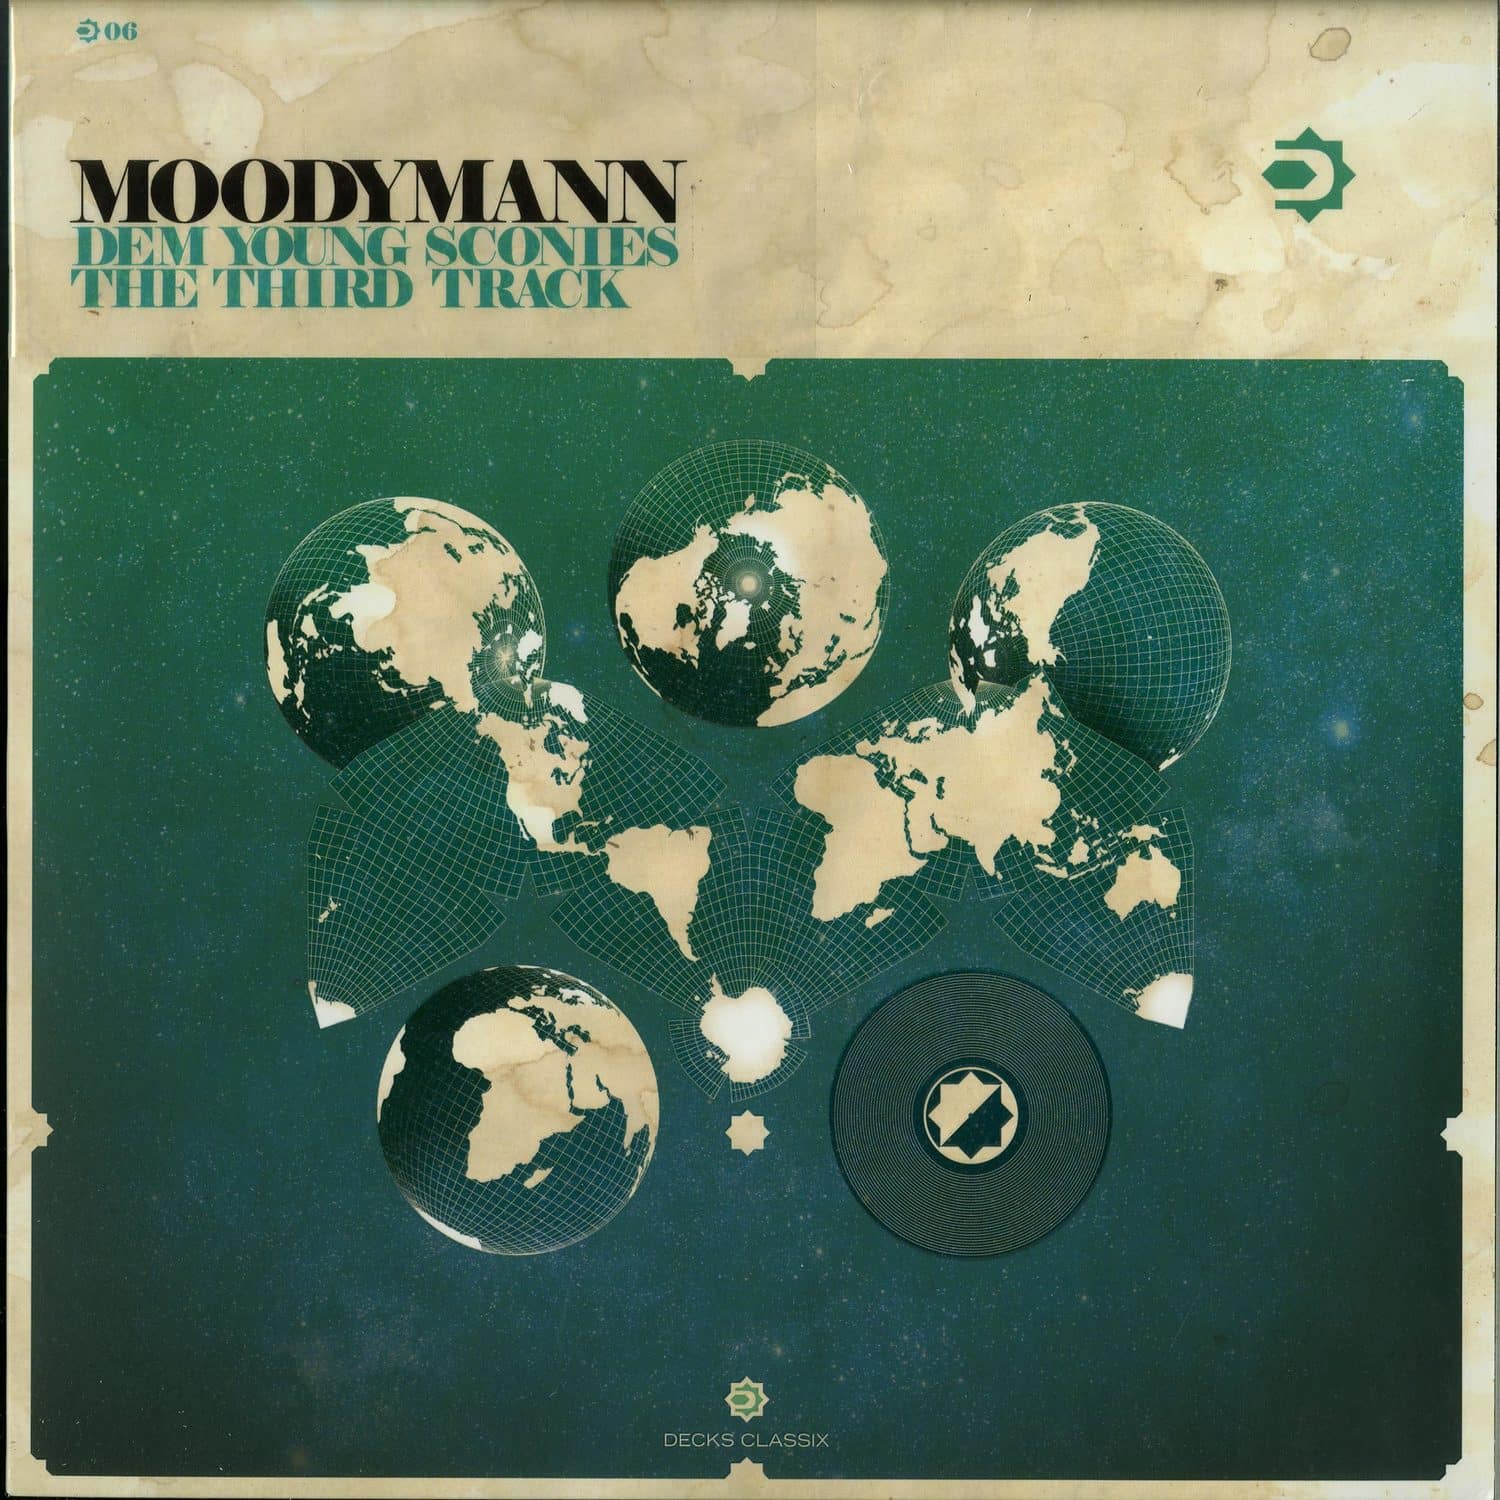 Moodymann - DEM YOUNG SCONIES / THE THIRD TRACK